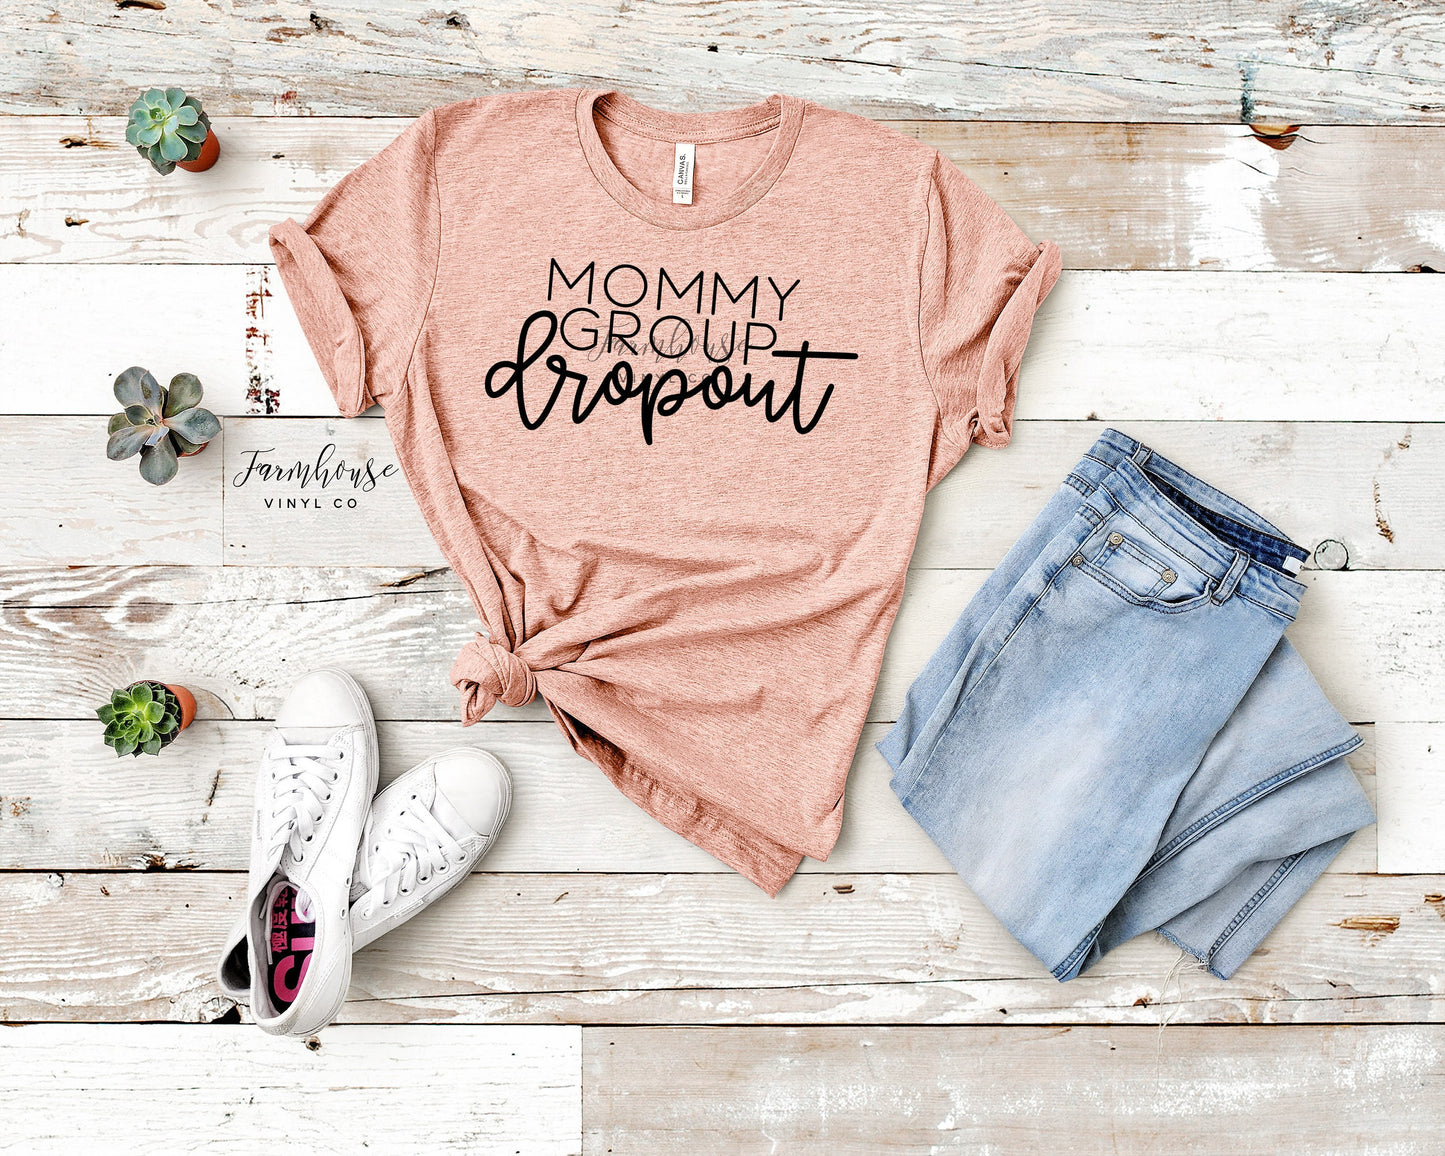 Mommy Group Dropout Tee Shirt~Mom Shirt Collection~Mom Tee Shirts~Mom Tee~Mom Shirts~SAHM~Mothers Day Gift~Homeschool Mom~Funny Mom Shirts - Farmhouse Vinyl Co